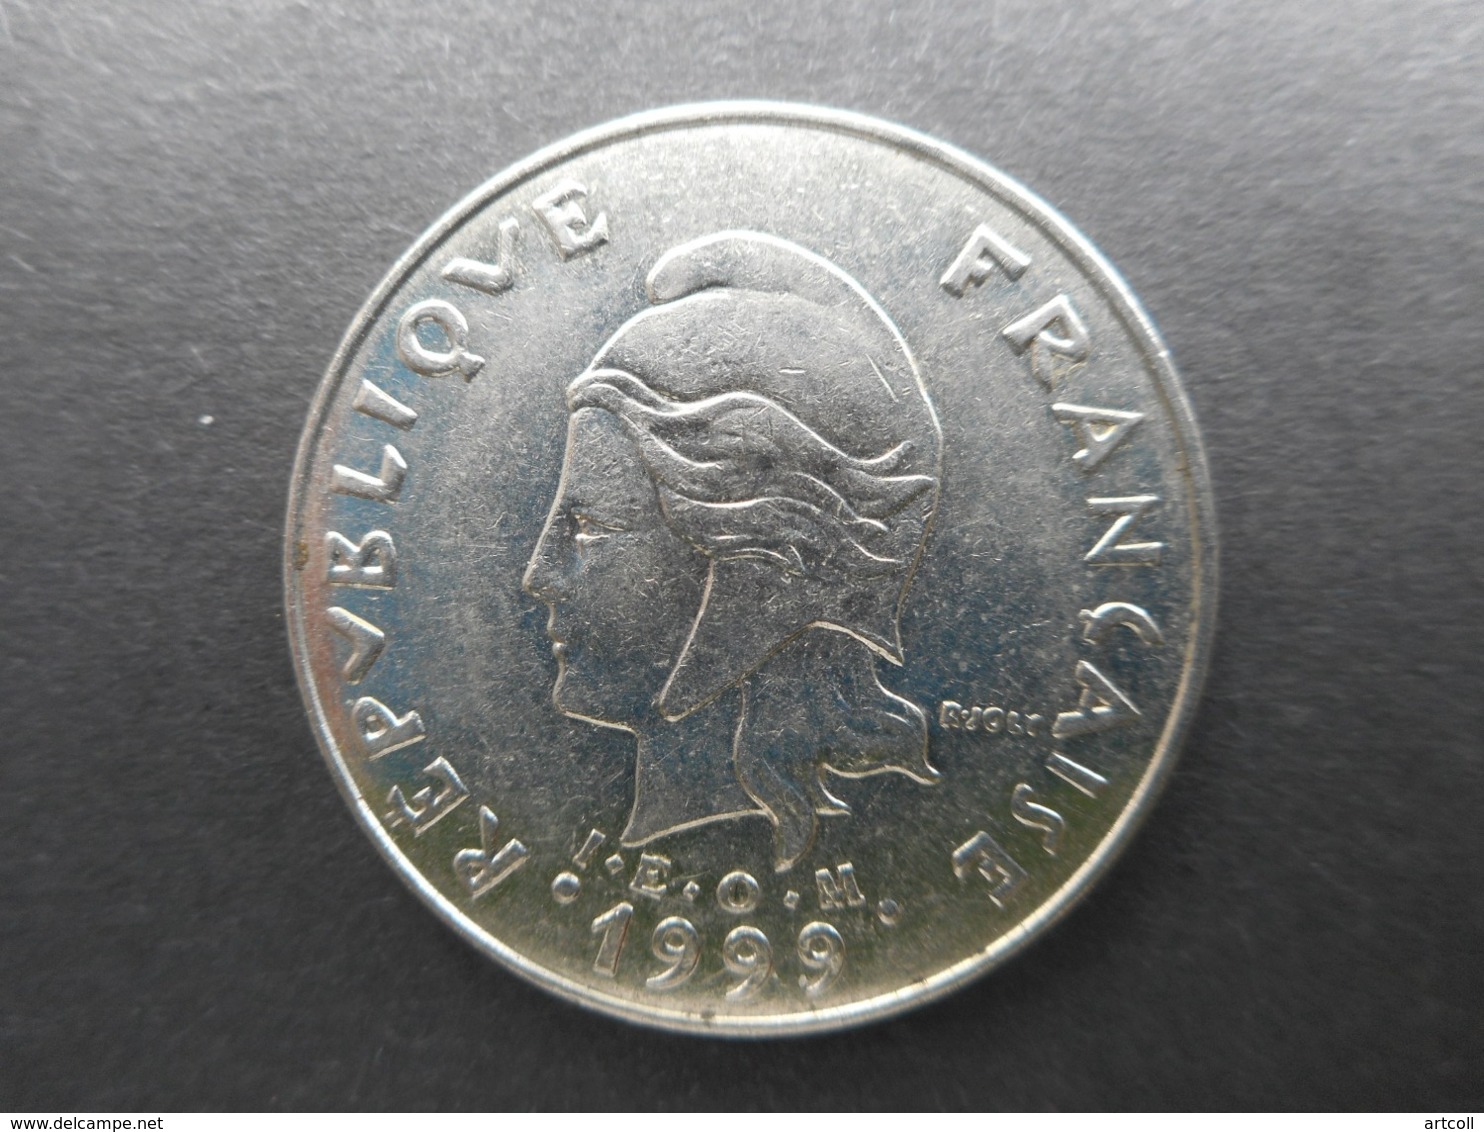 French Polynesia 20 Francs 1999 - Polynésie Française